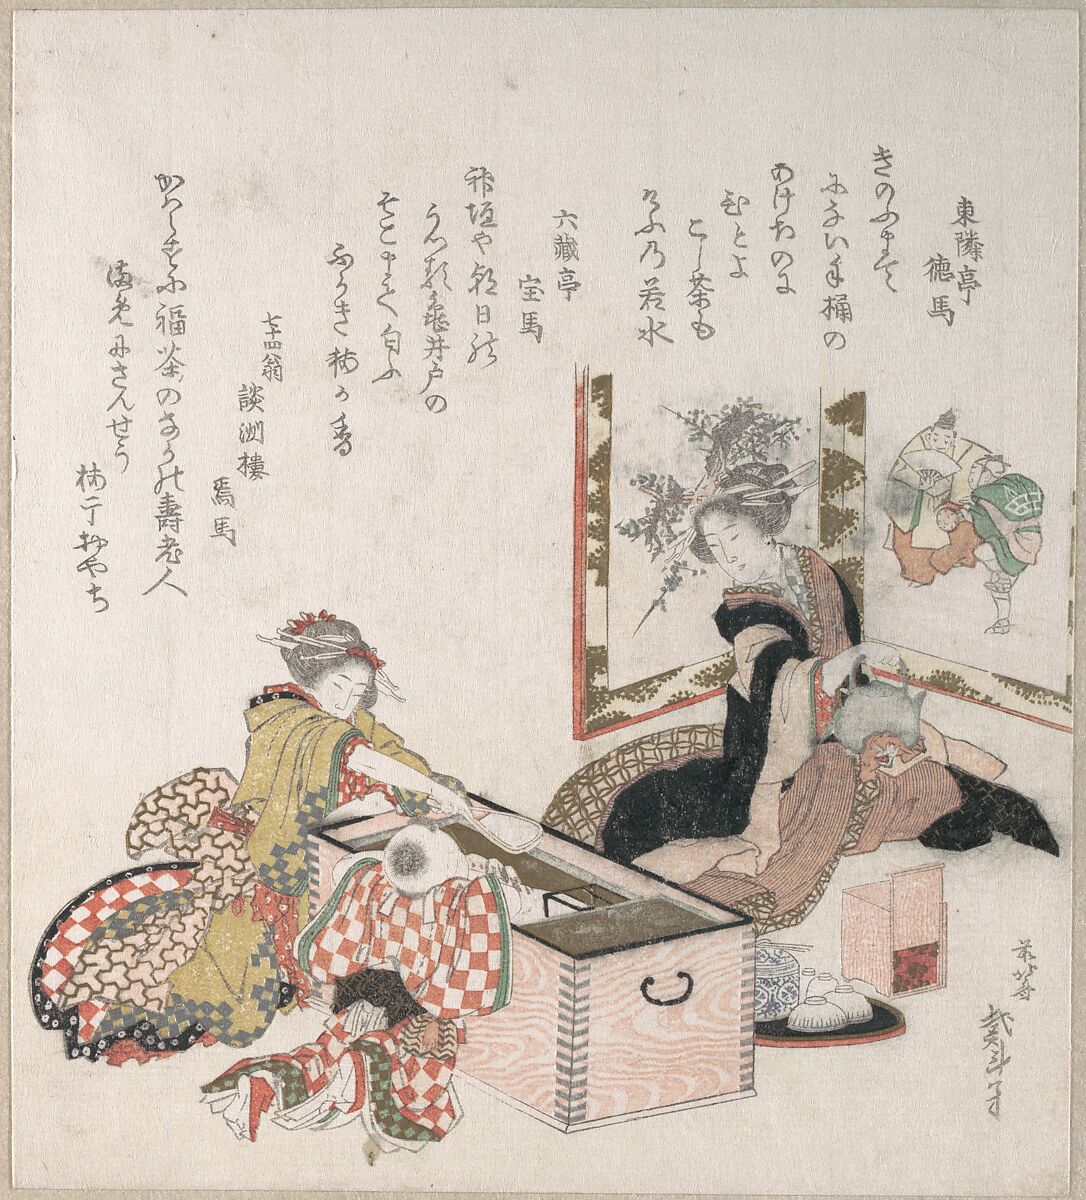 Women Preparing Tea Around the Fire-Holder, Katsushika Hokusai (Japanese, Tokyo (Edo) 1760–1849 Tokyo (Edo)), Part of an album of woodblock prints (surimono); ink and color on paper, Japan 